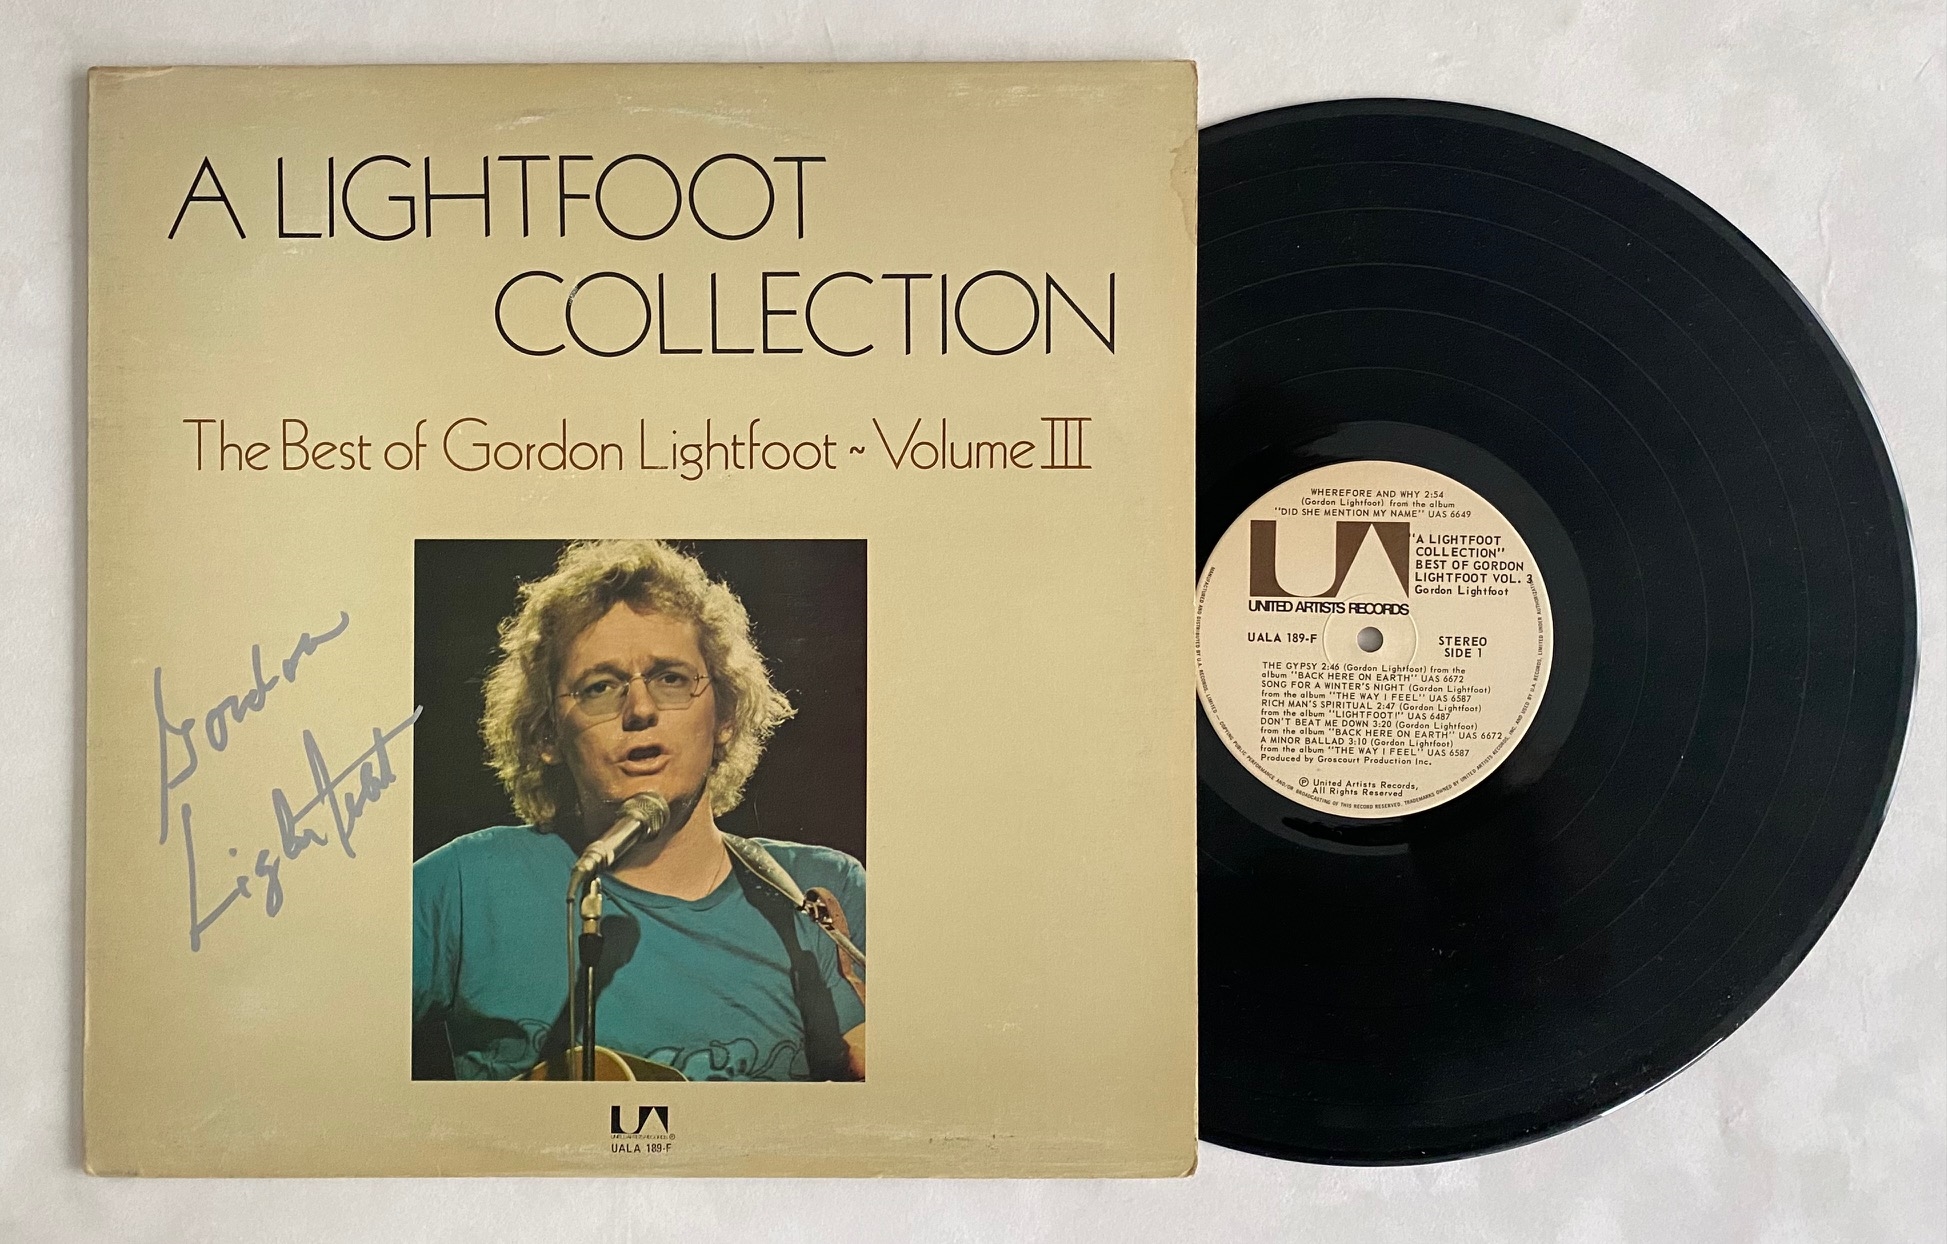 Gordon Lightfoot Signed "A Lightfoot Collection, Best of Vol. 3" Record Album & Vinyl